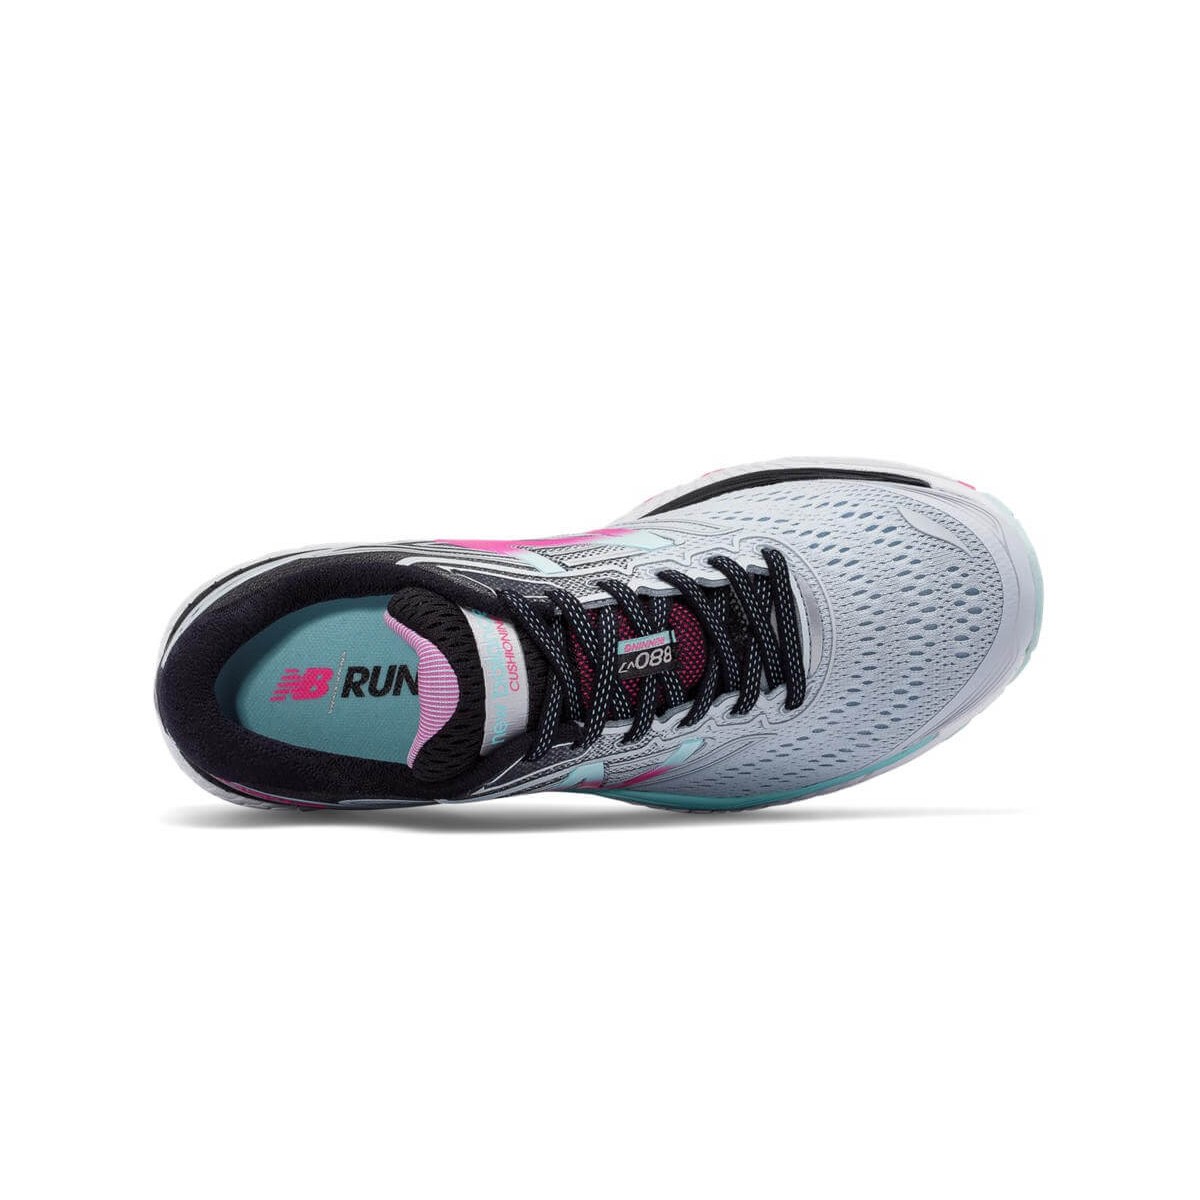 Adaptación Entre Ánimo New Balance 880 v7 Running Shoes Gray Blue / Pink AW17 Woman